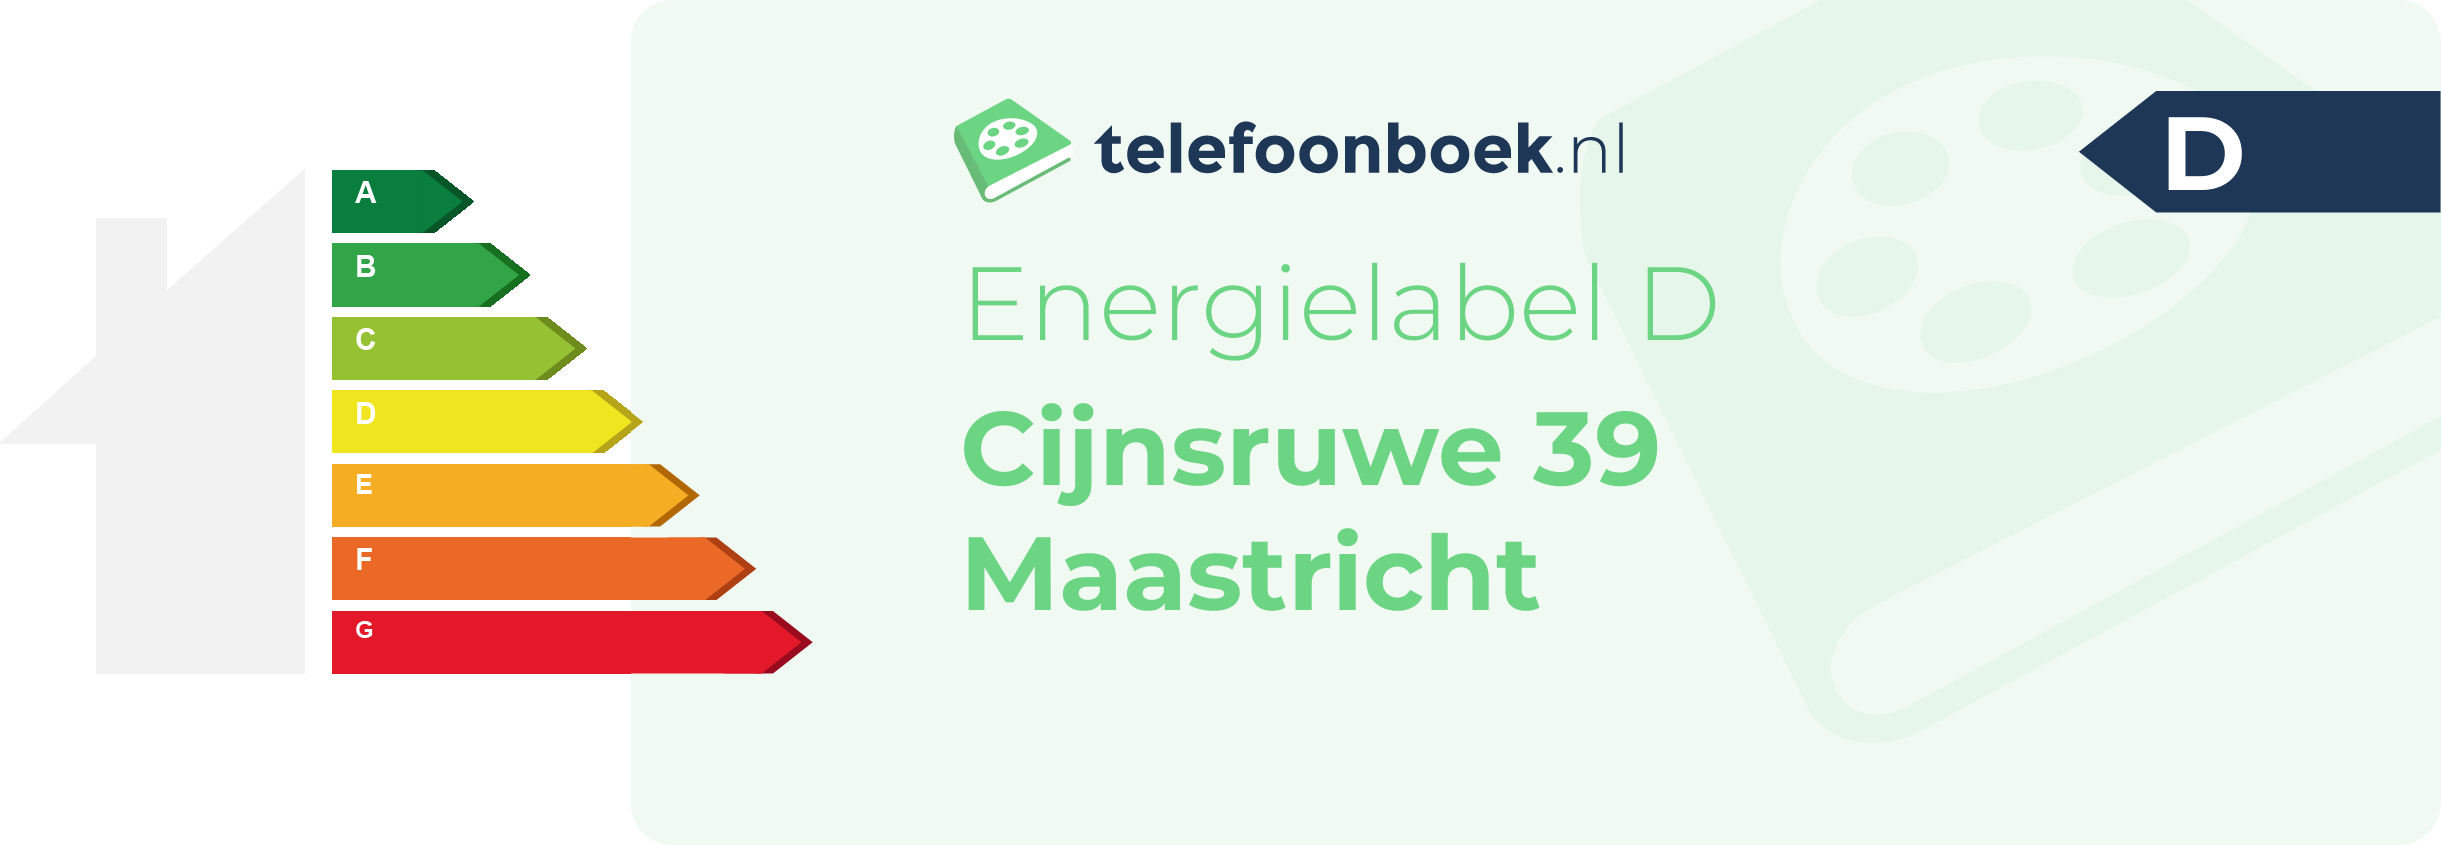 Energielabel Cijnsruwe 39 Maastricht